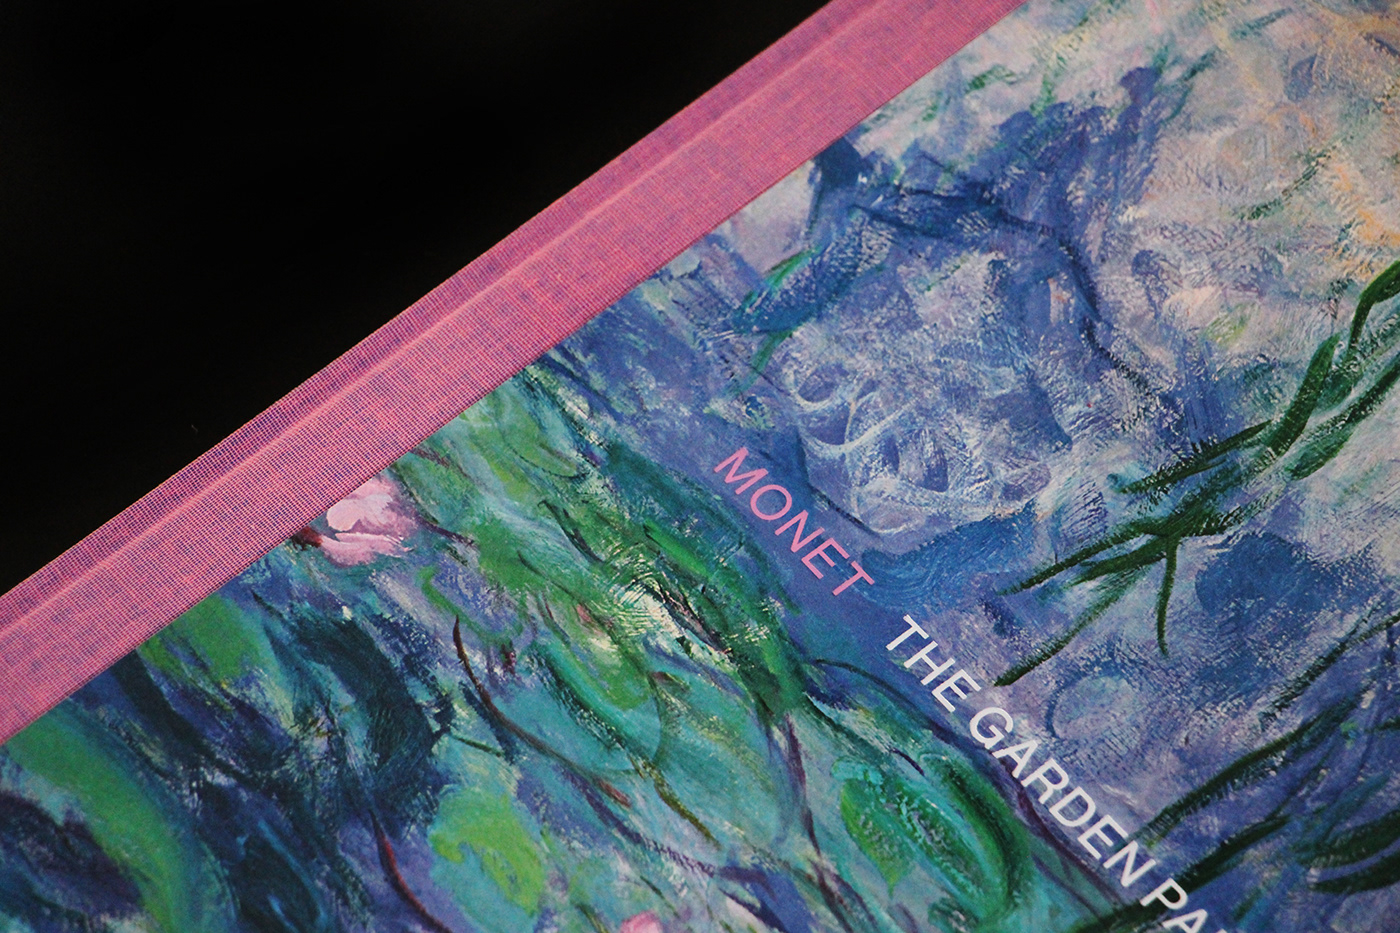 Monet Claude Monet Paintings impressionism Water Lilies Kunstmuseum Den Haag Exhibition  Catalogue book design cover design